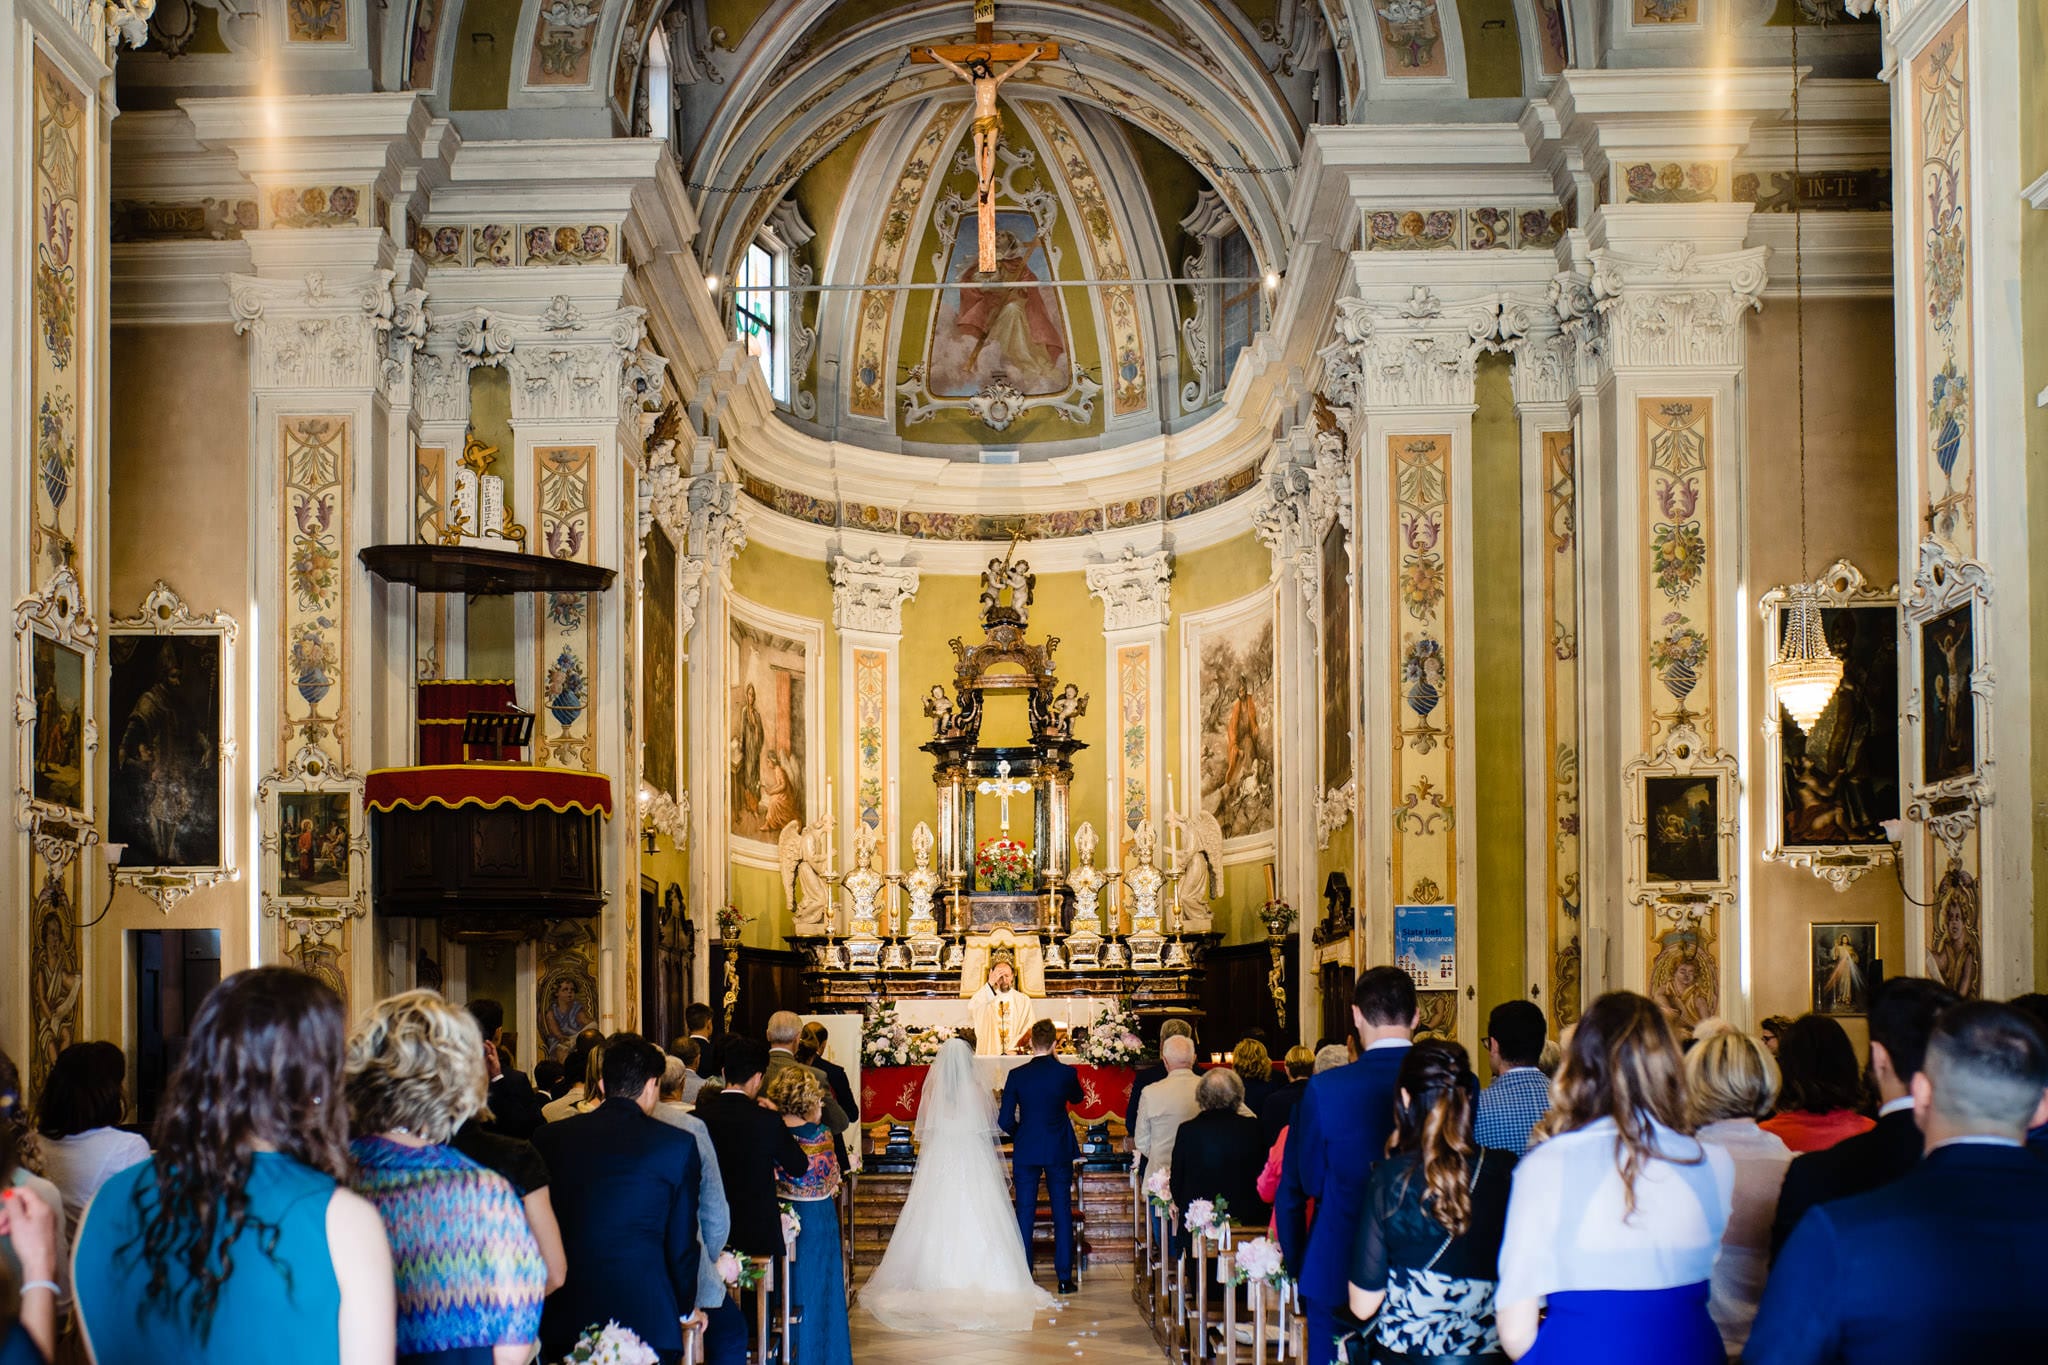 Paolo Lamperti Fotografo Elegante Matrimonio Tenuta La Quassa Cerimonia